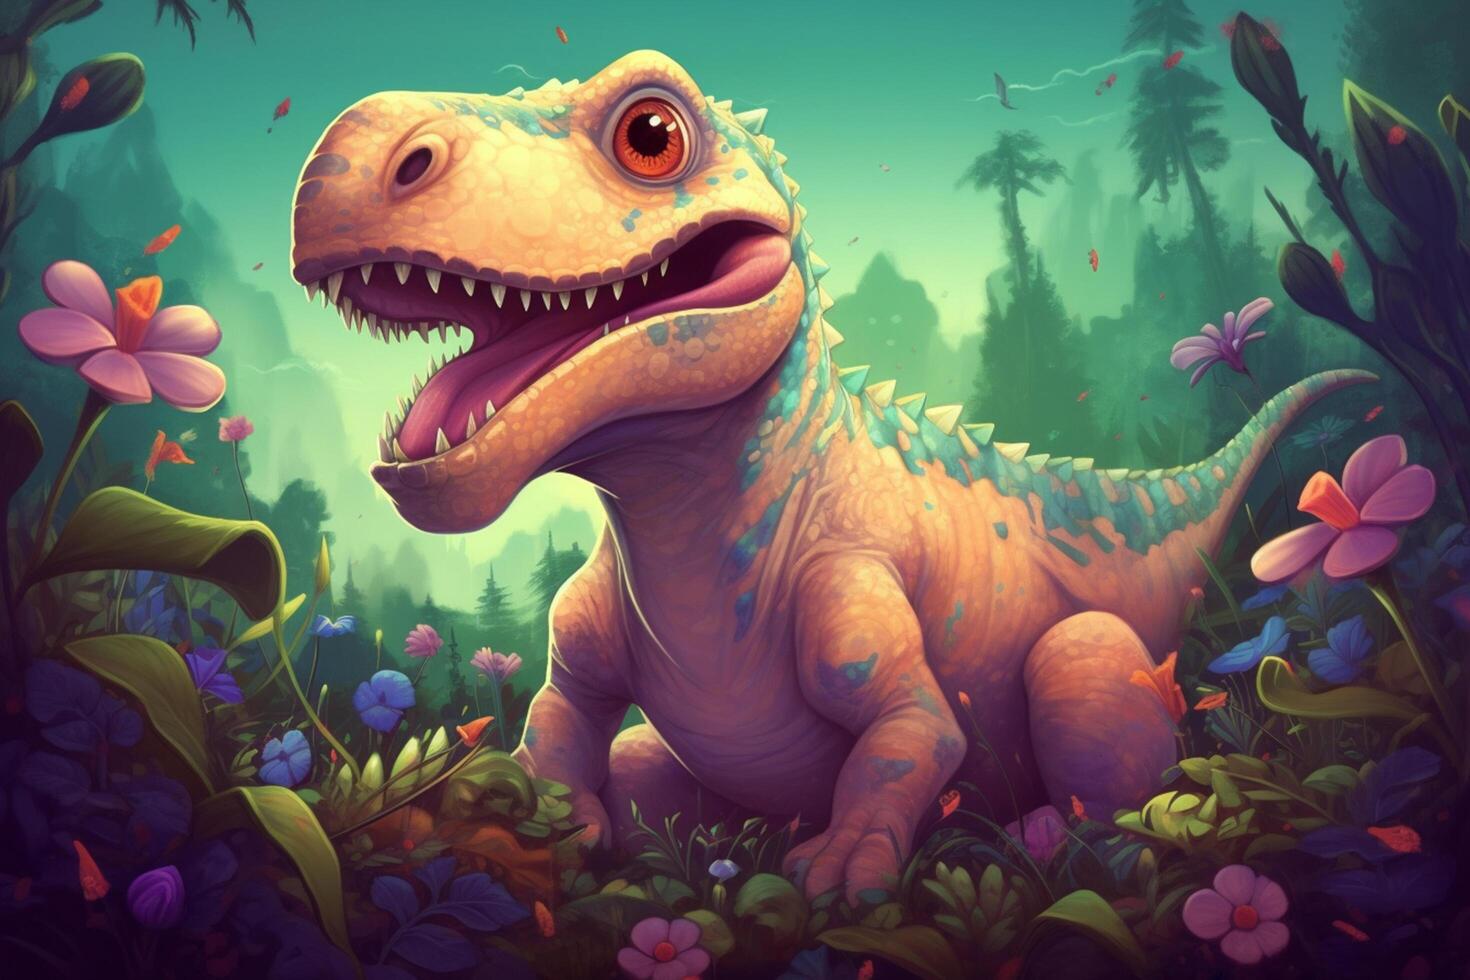 Playful and Vibrant Digital Art Hilarious Allosaurus Dinosaur Comic Illustration photo